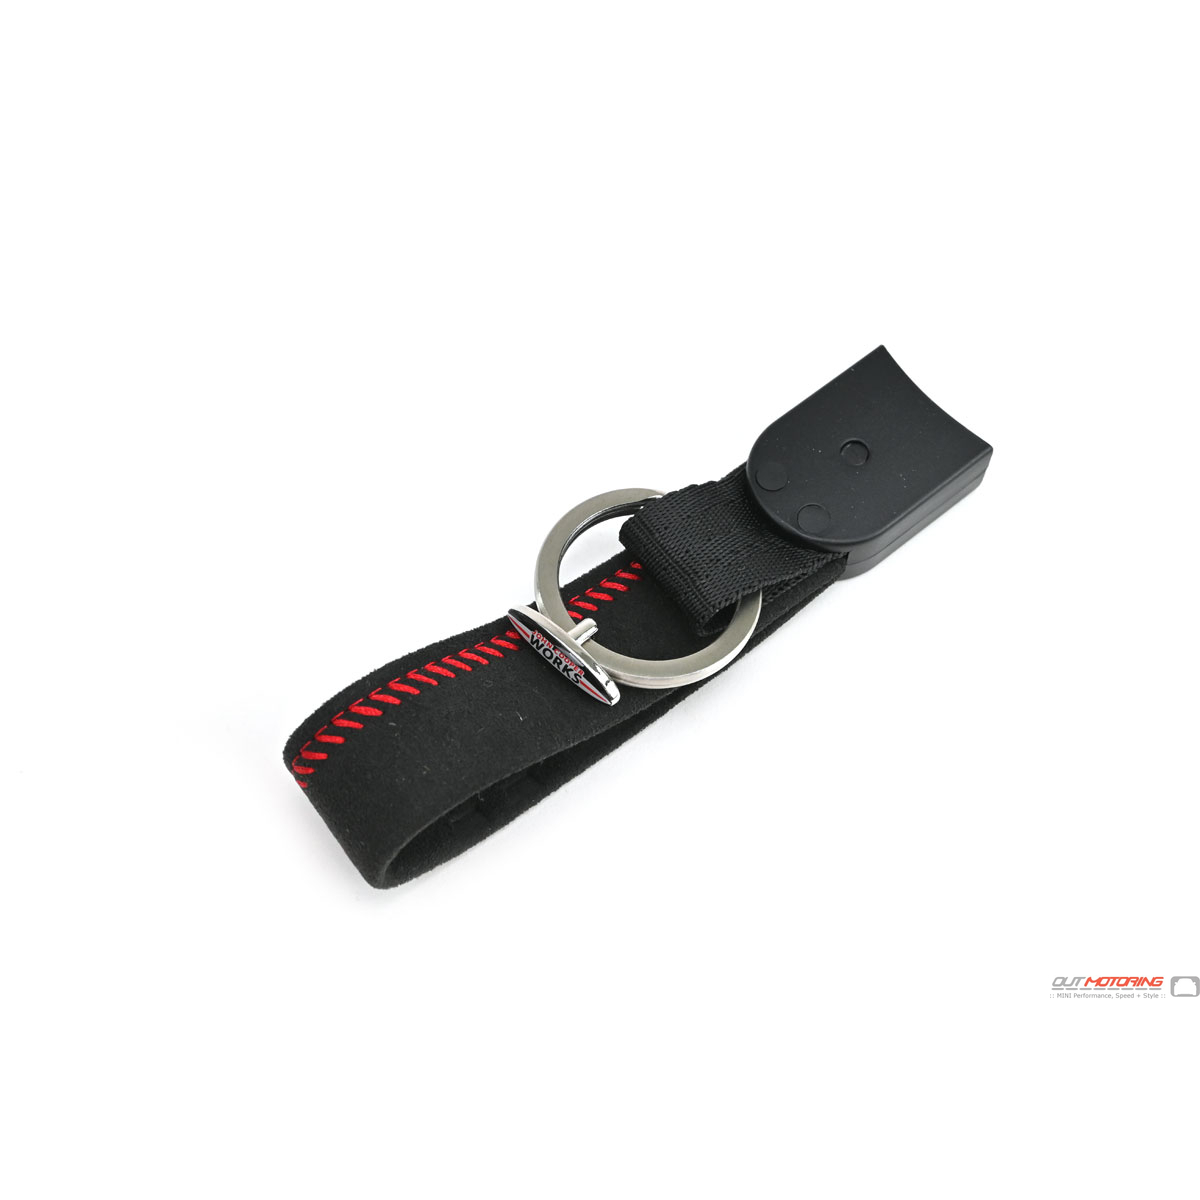 822924699 MINI Cooper Gen 3 key chain lanyard wristband - MINI